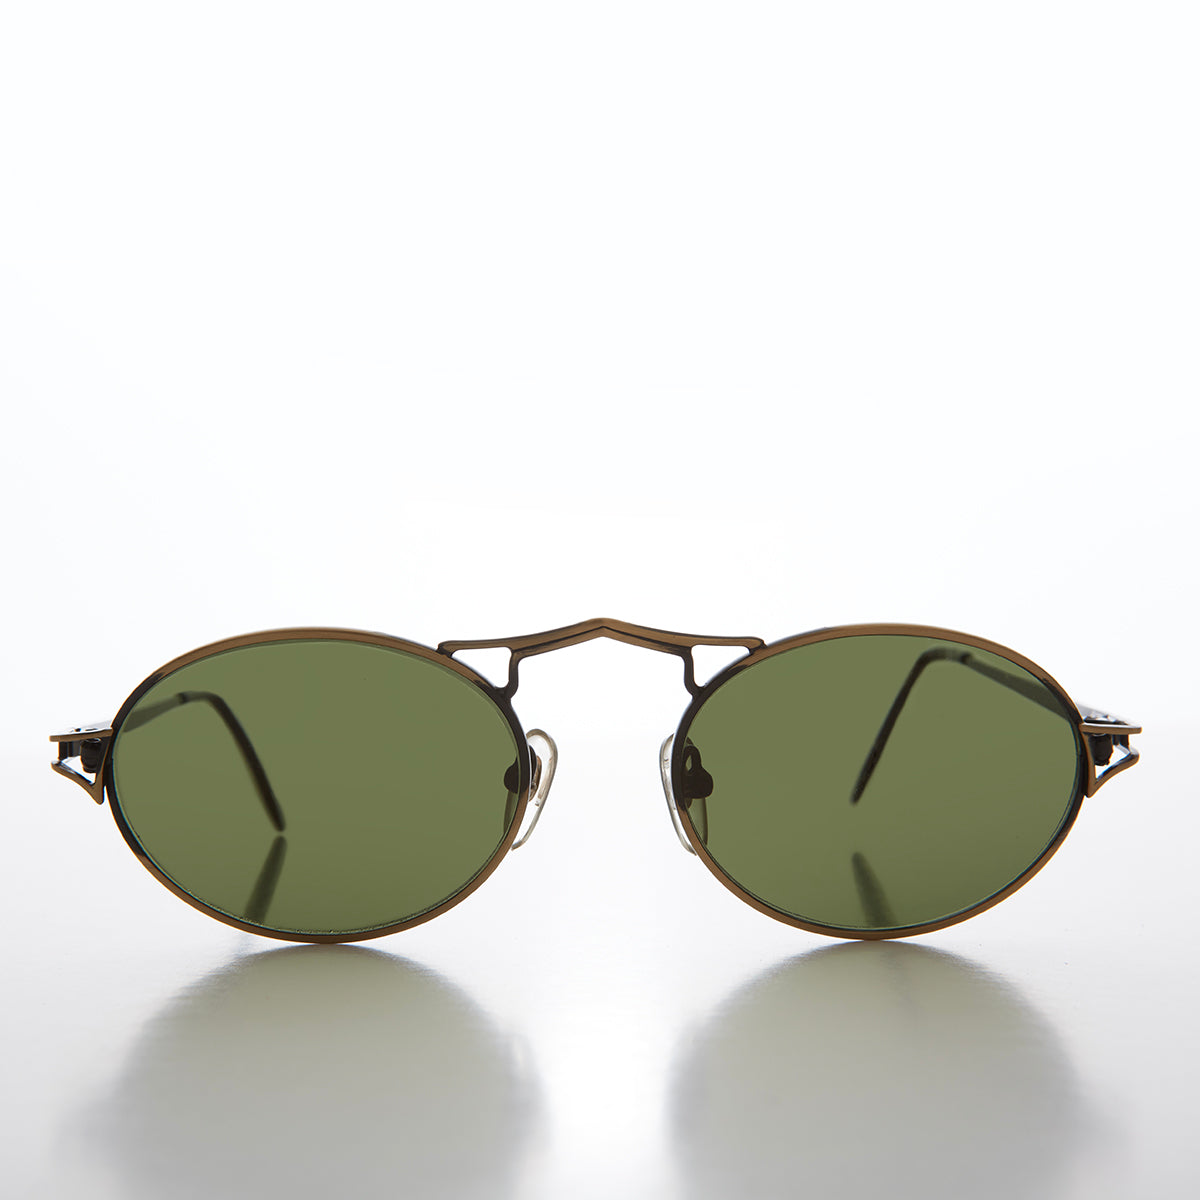 bronze oval metal sunglasses